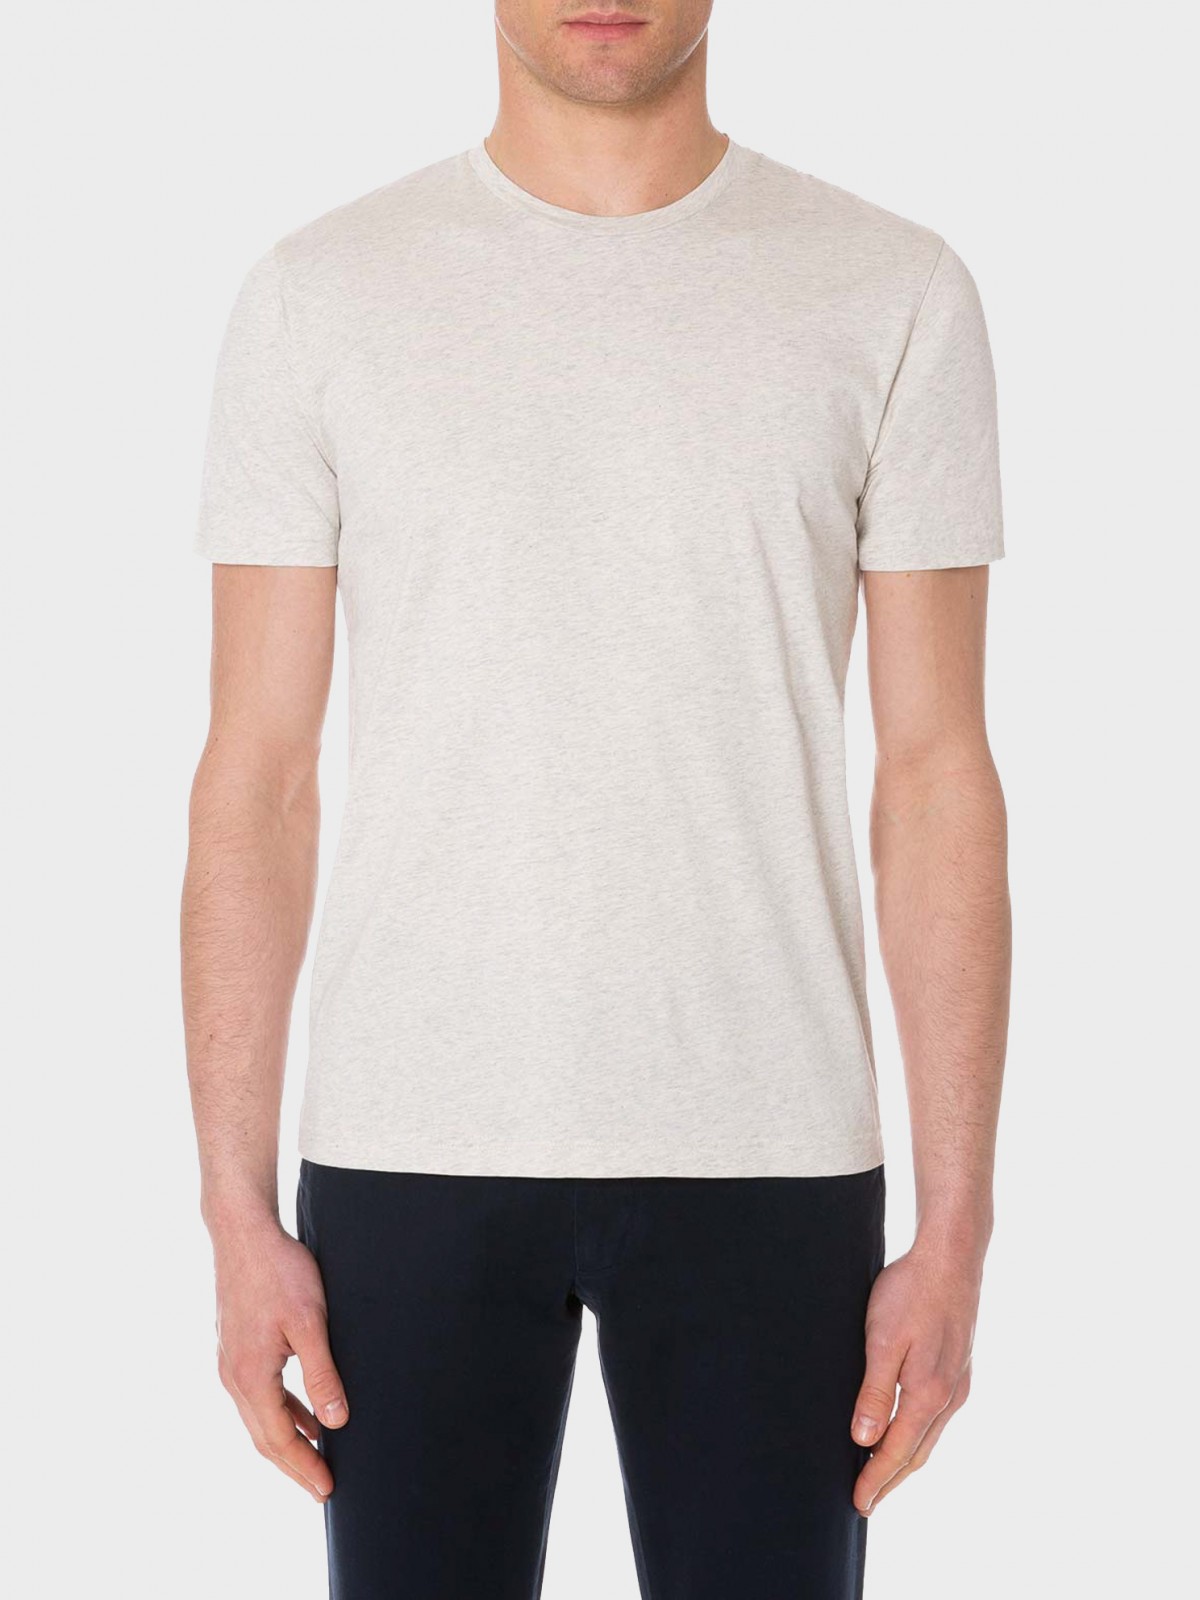 Sunspel Short Sleeve Riviera Crew Neck T-Shirt  in Archive White